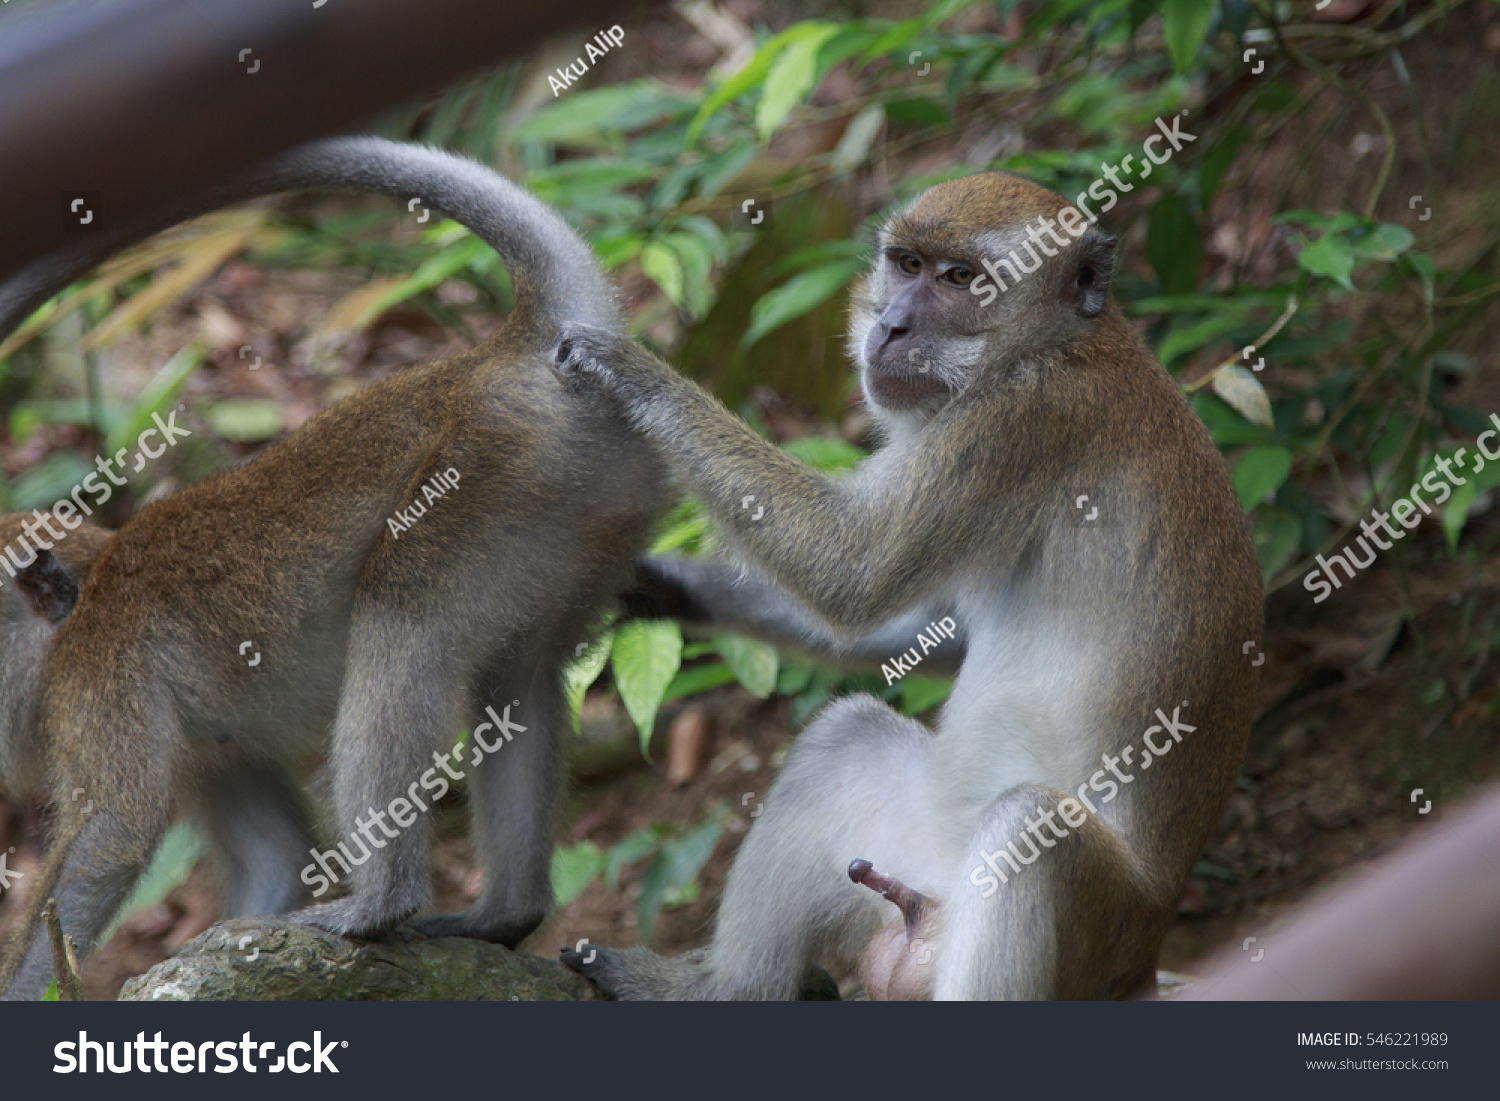 Monkey Smelling Each Other Butt One Foto Stok 546221989 Shutterstock.